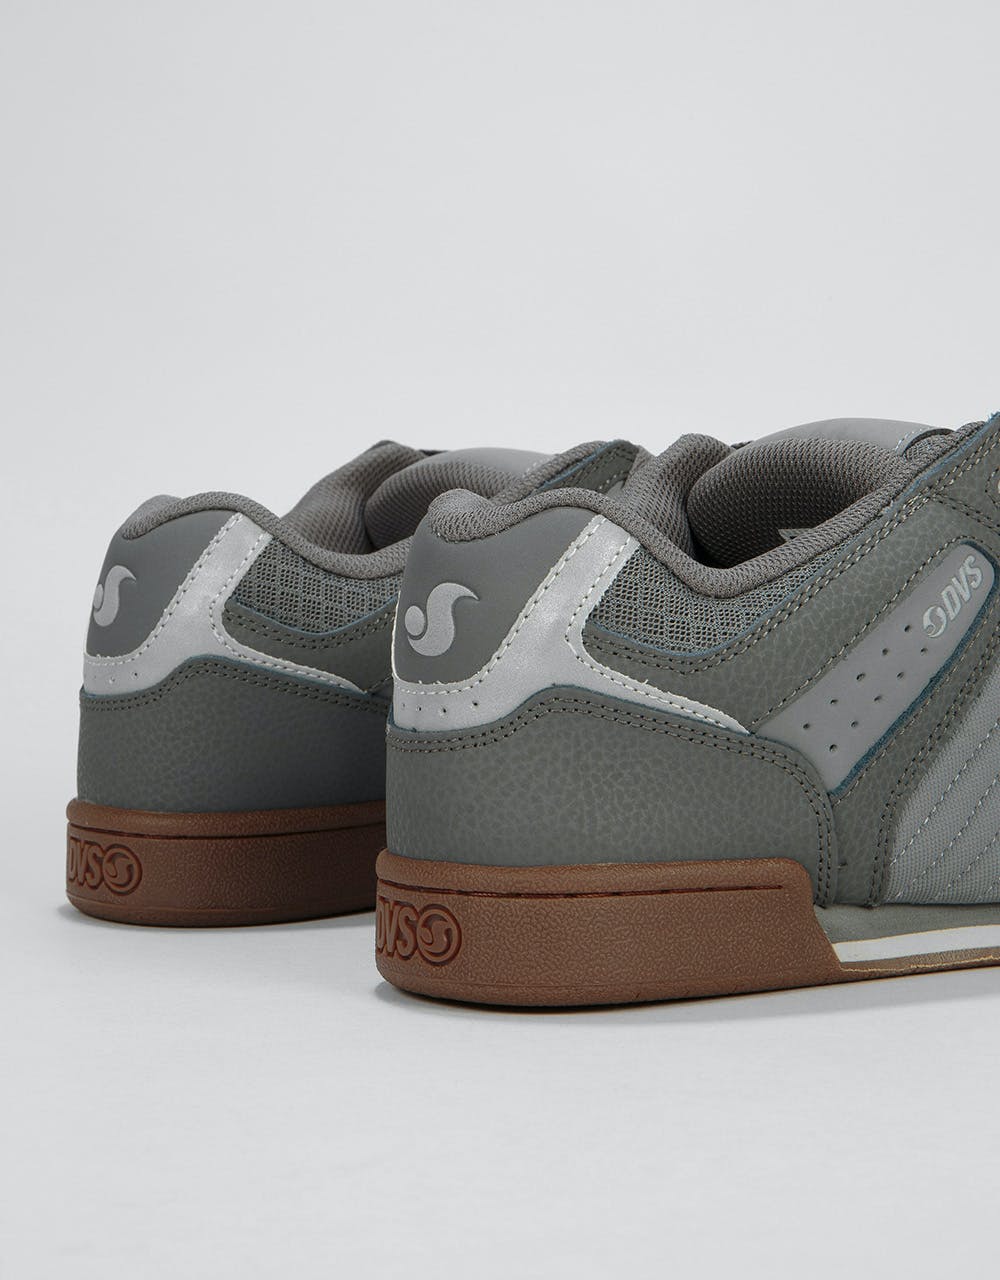 DVS Celsius Skate Shoes - Charcoal Grey Nubuck